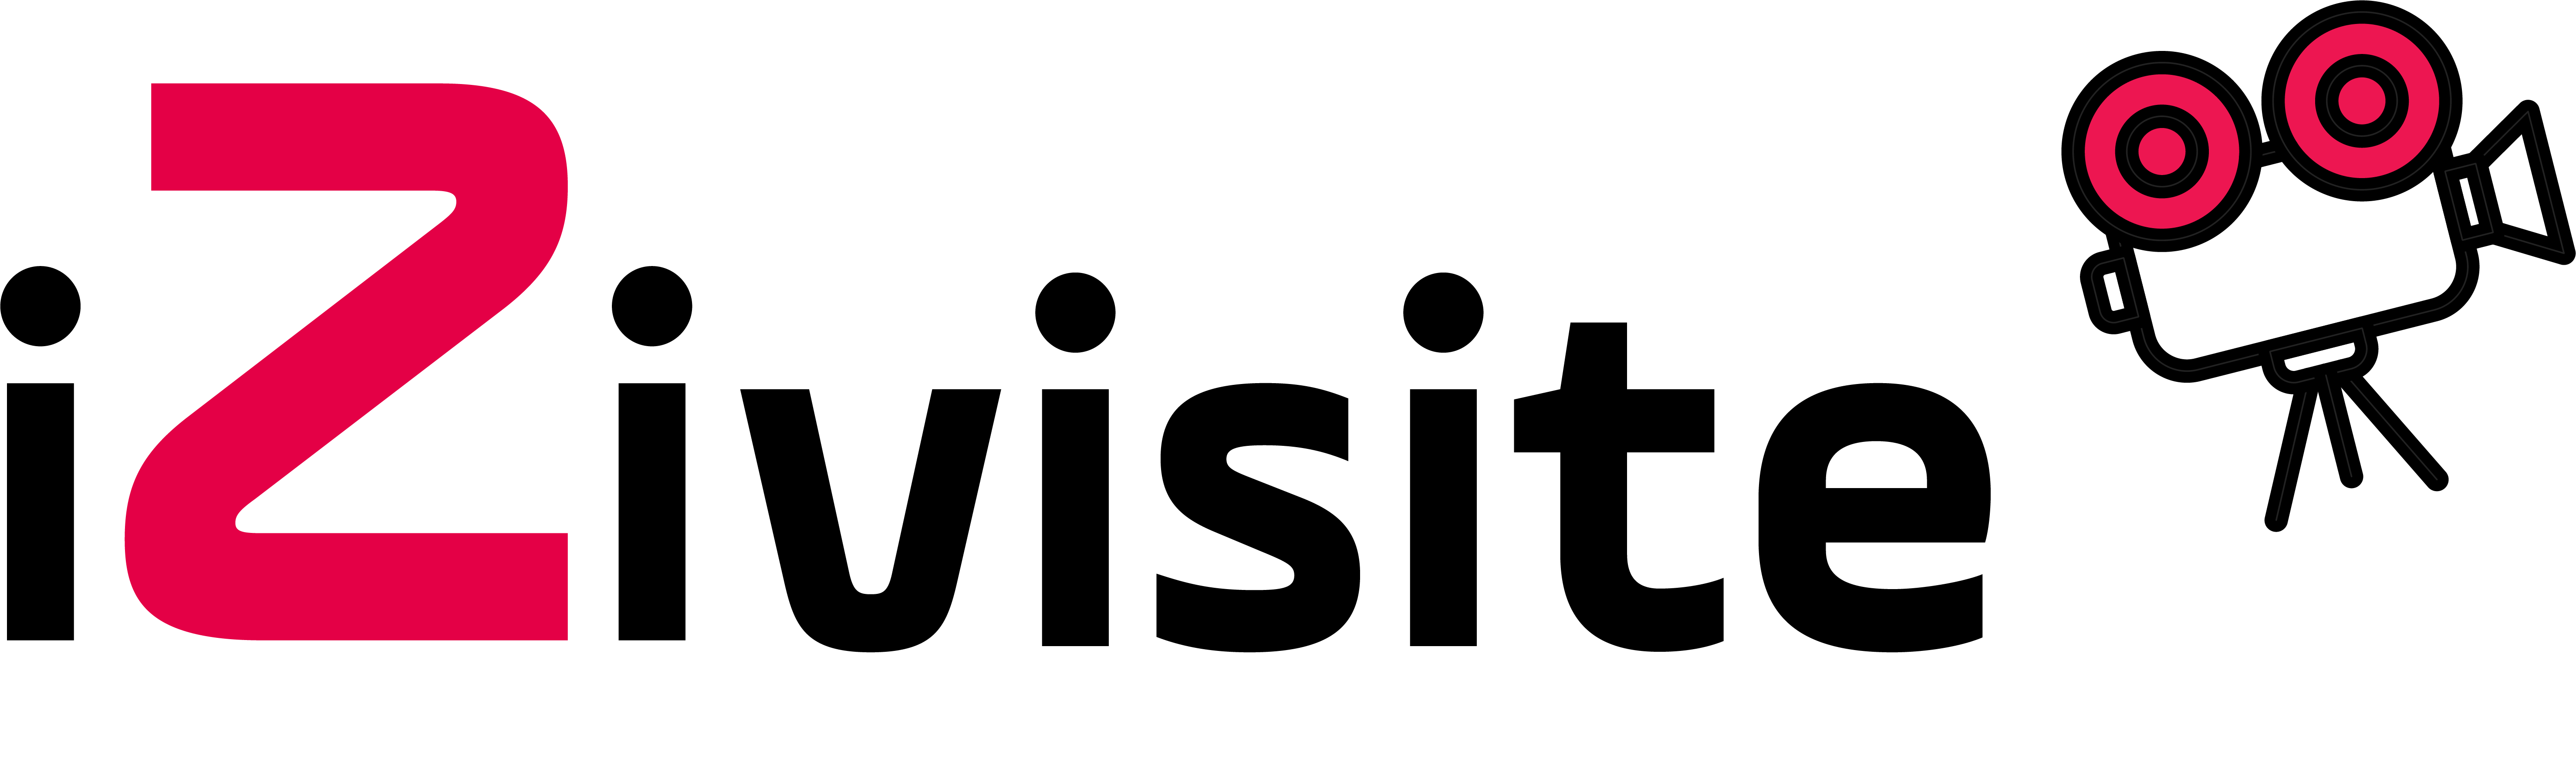 iZivisite logo